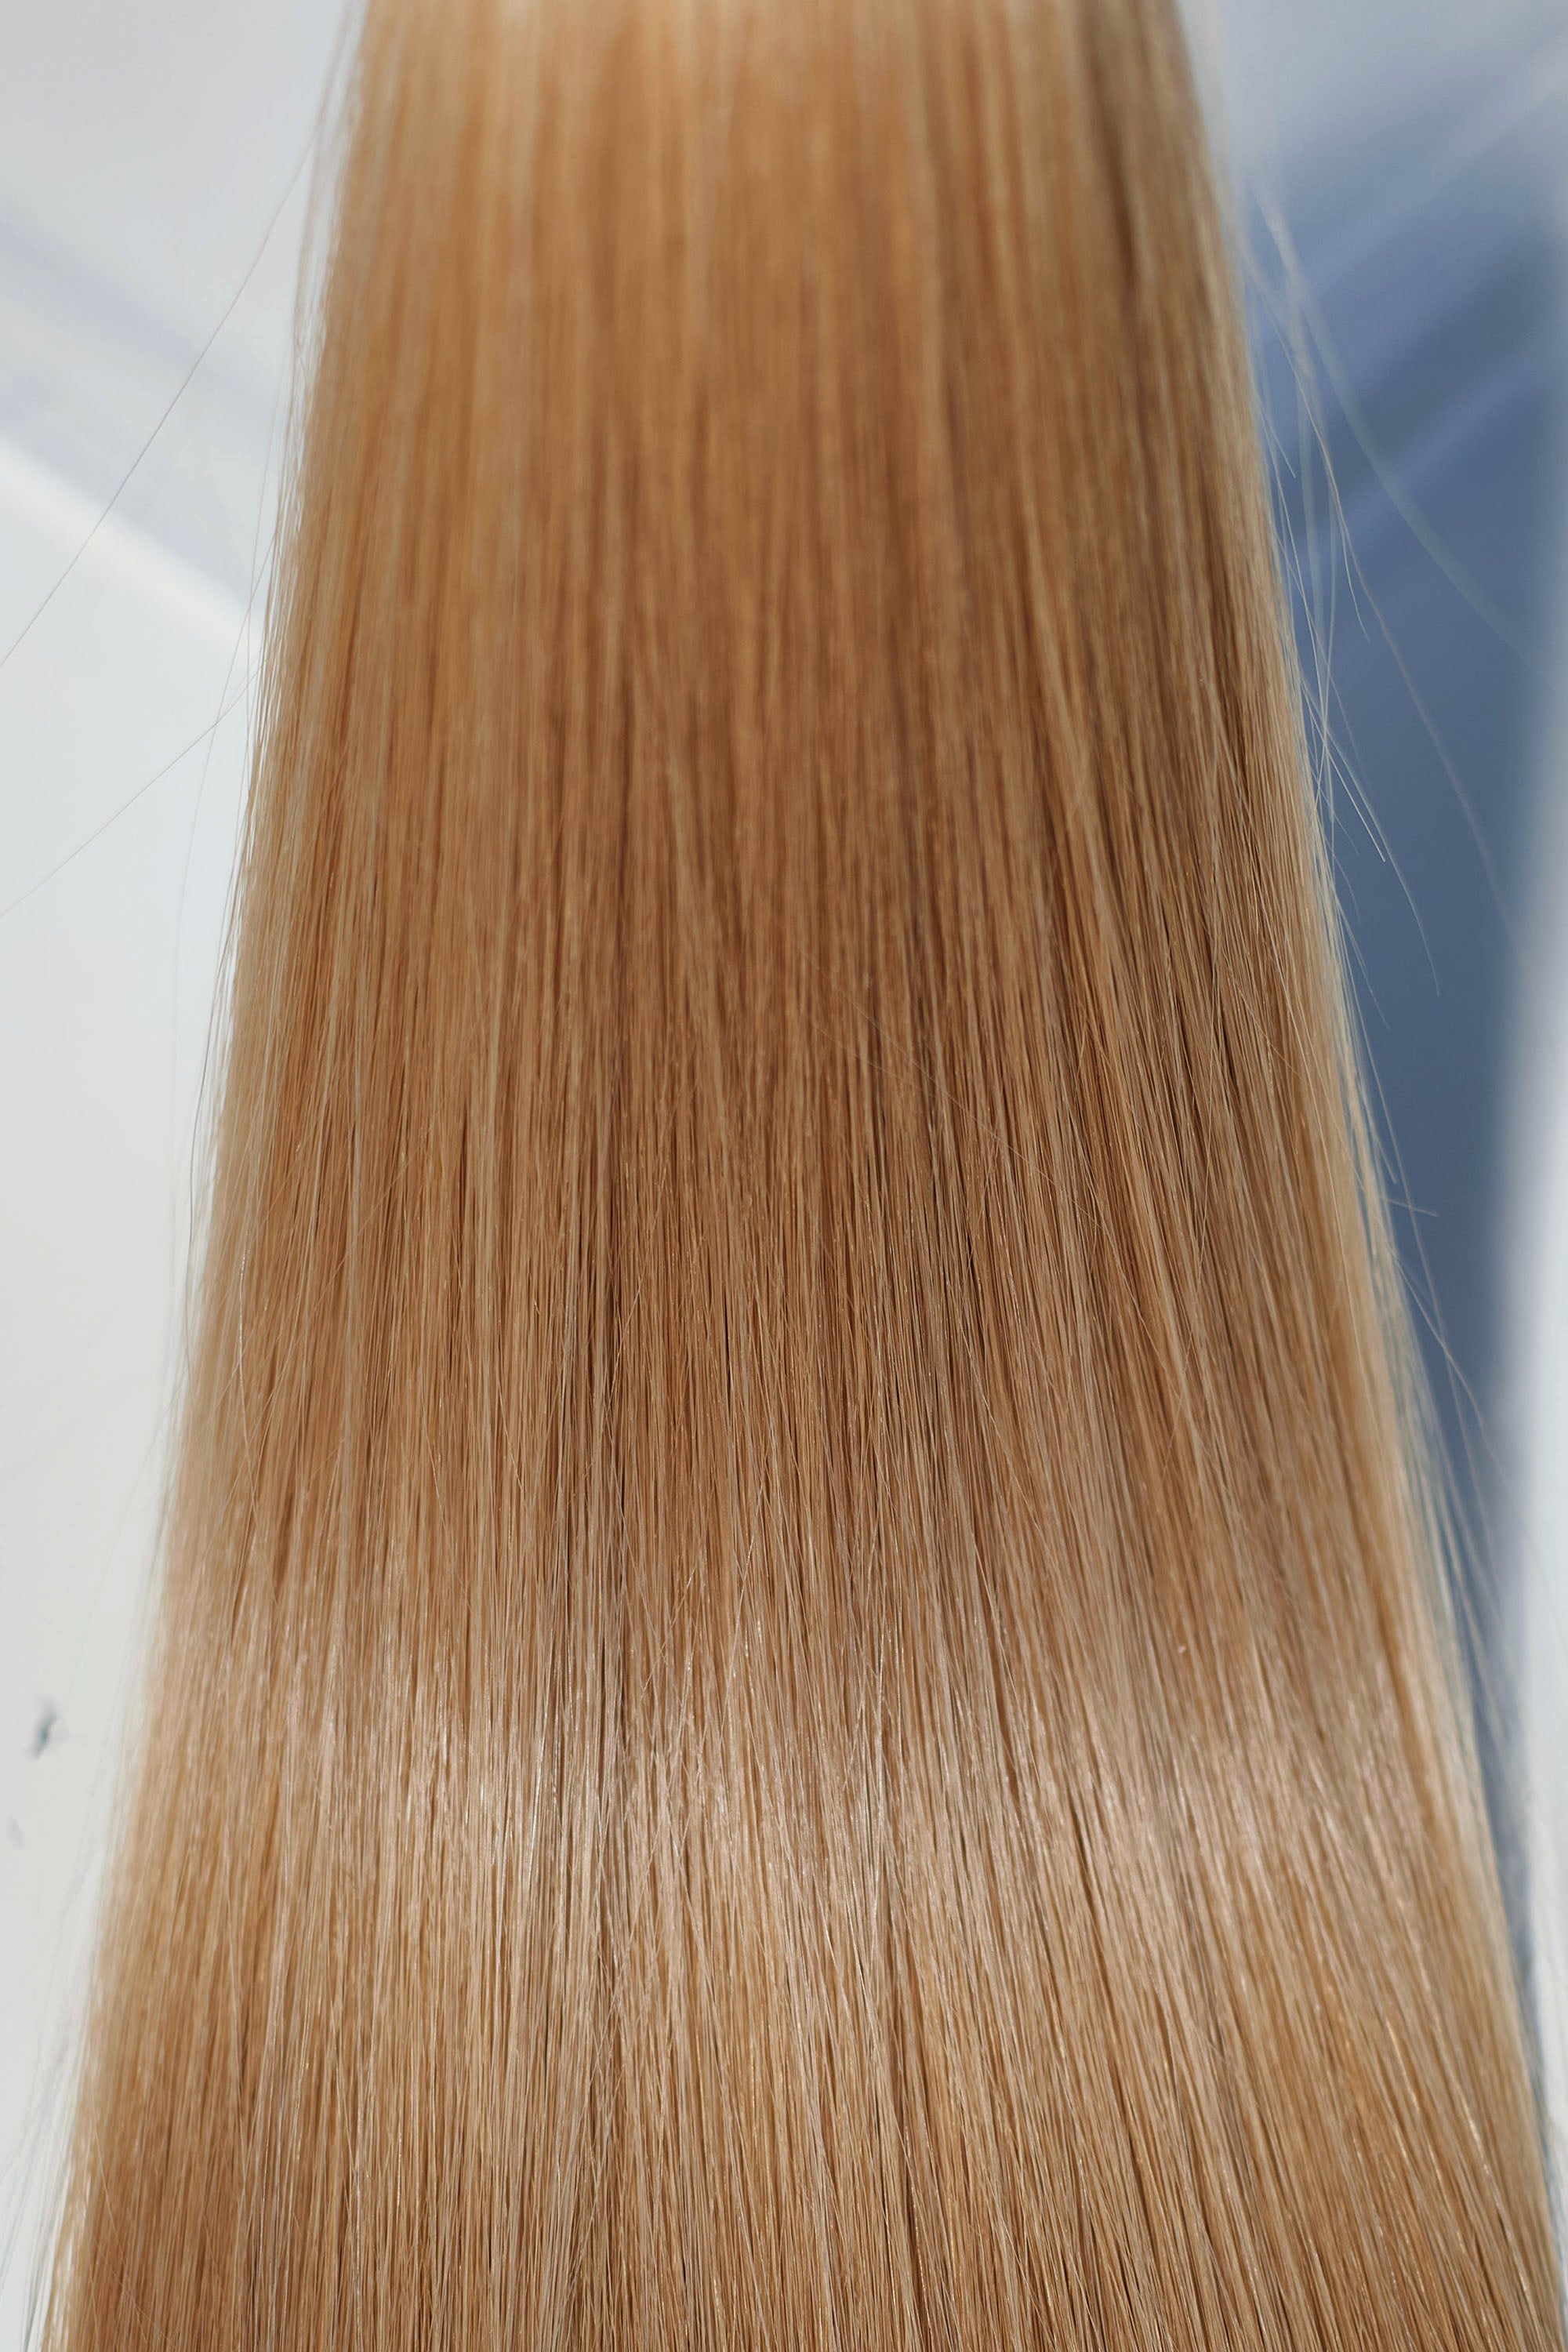 Behair professional Keratin Tip "Premium" 28" (70cm) Natural Straight Gold Sand #18 - 25g (Standart - 0.7g each pcs) hair extensions